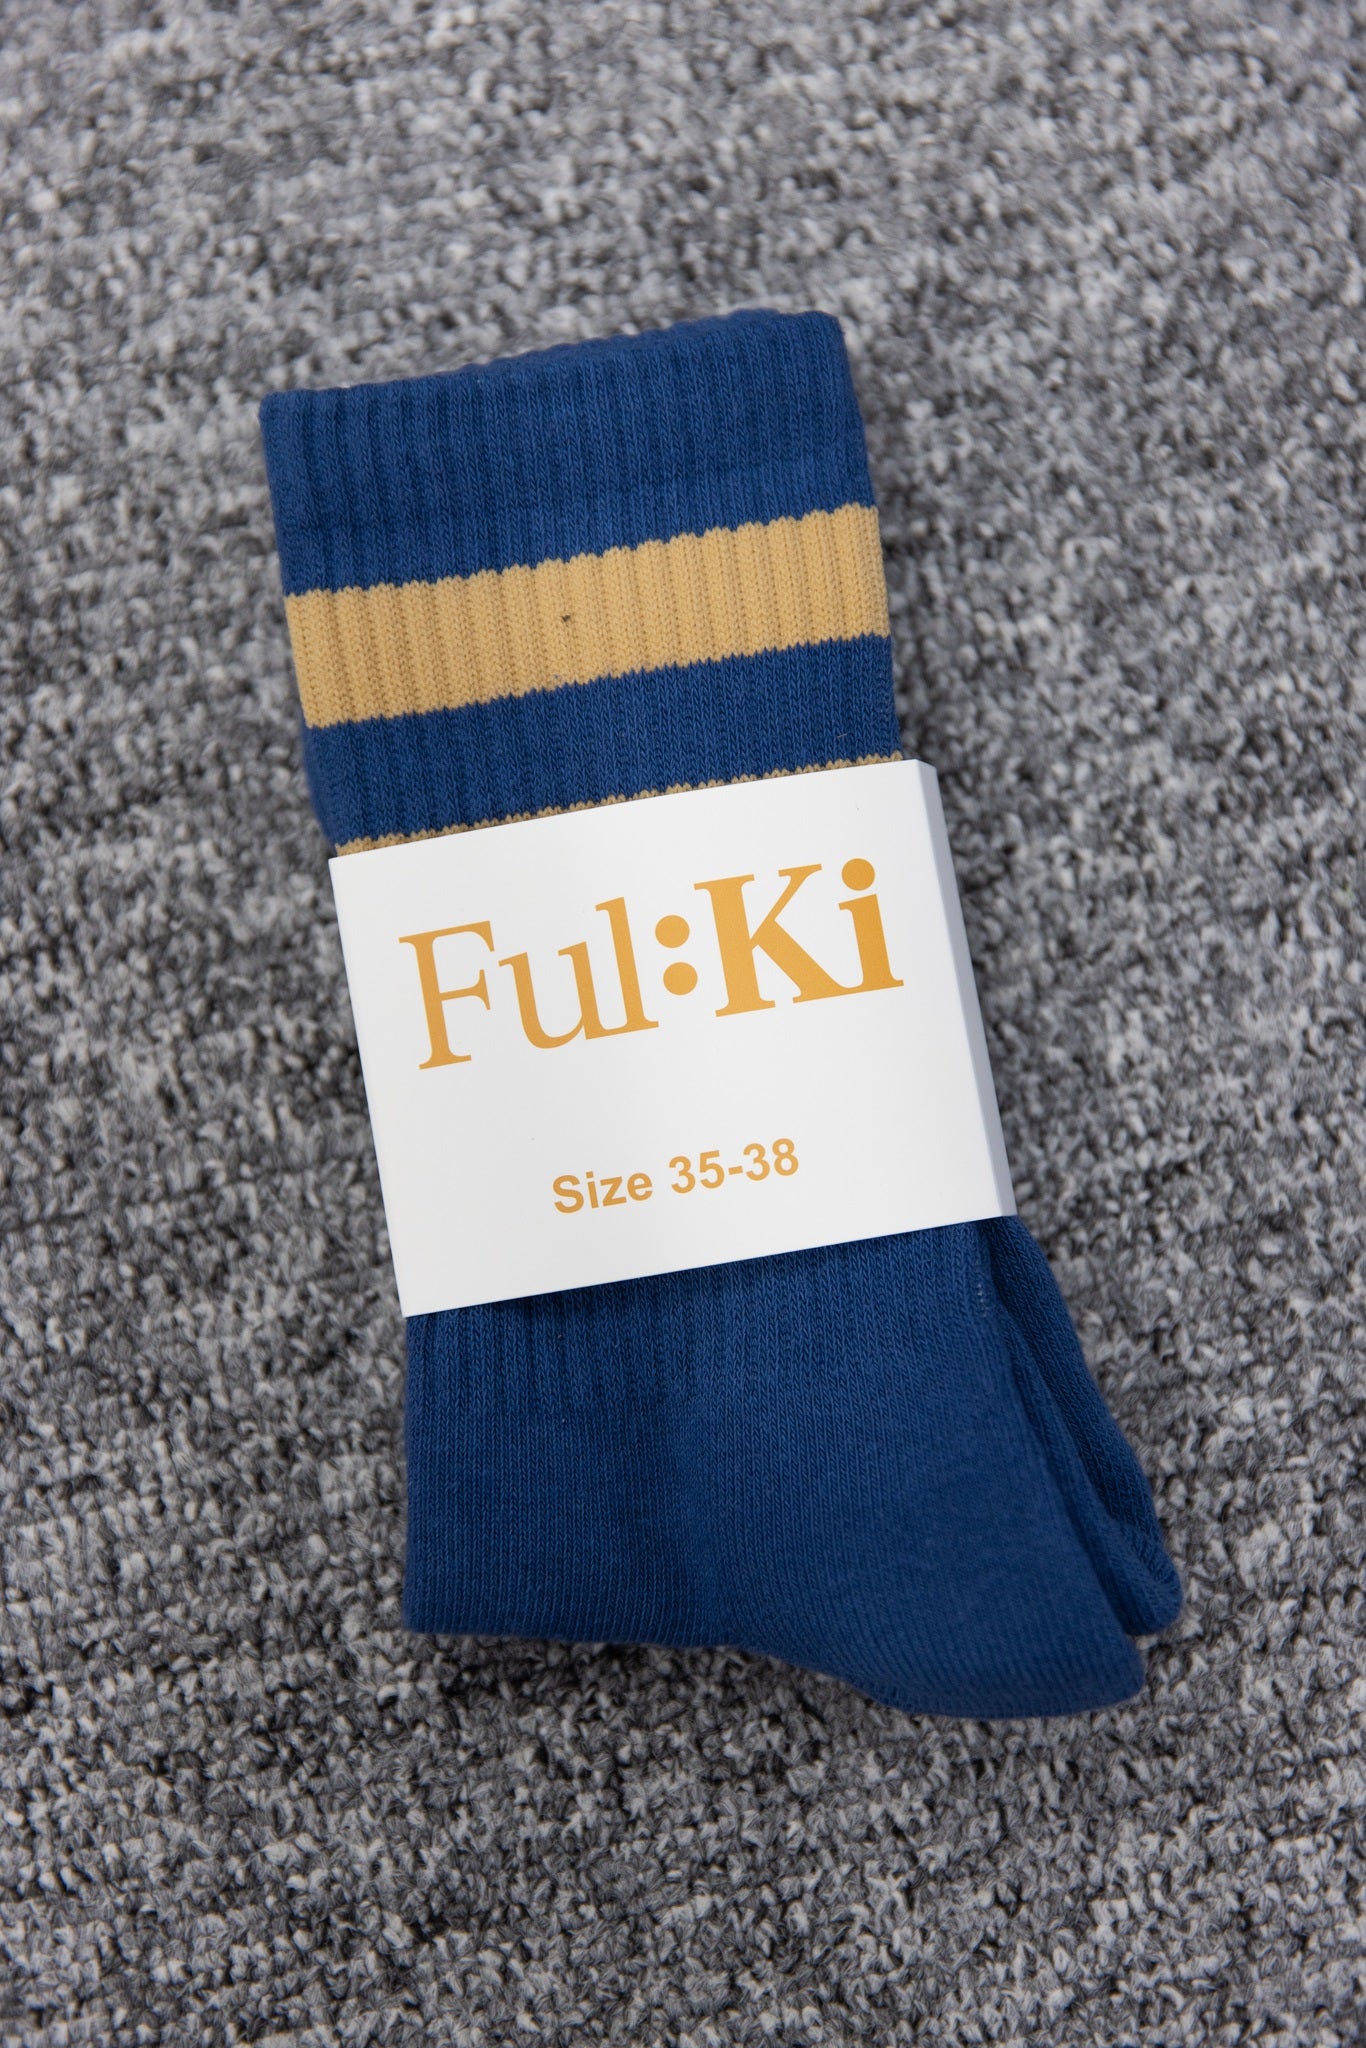 Ful:Ki Activewear - Sports Socks - Blue